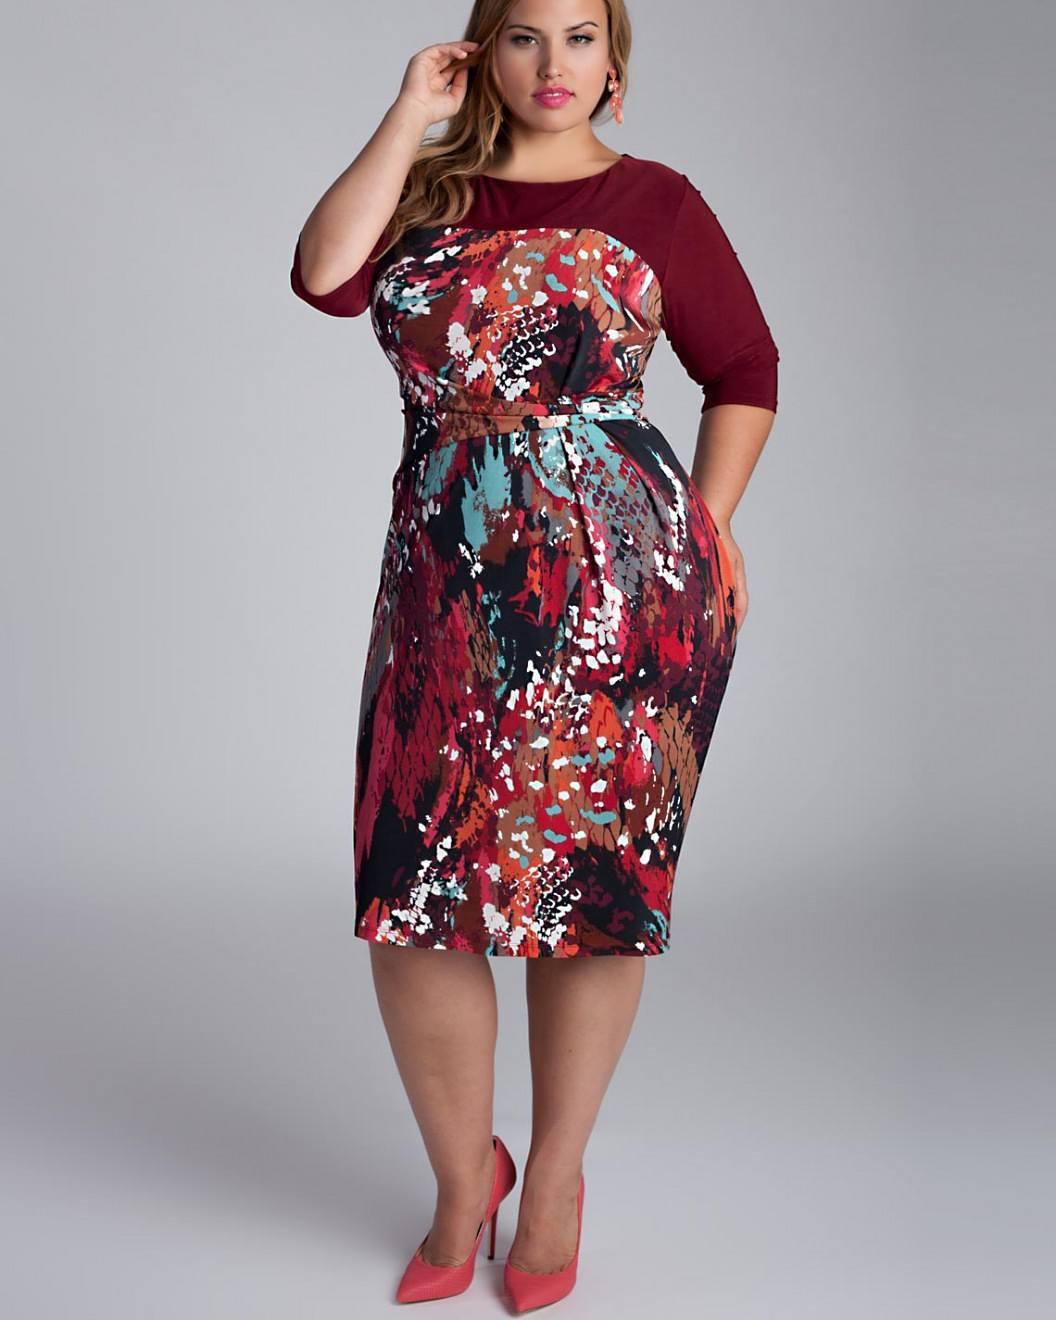 Plus Size Dress, Plus-size clothing, Plus-size model on Stylevore